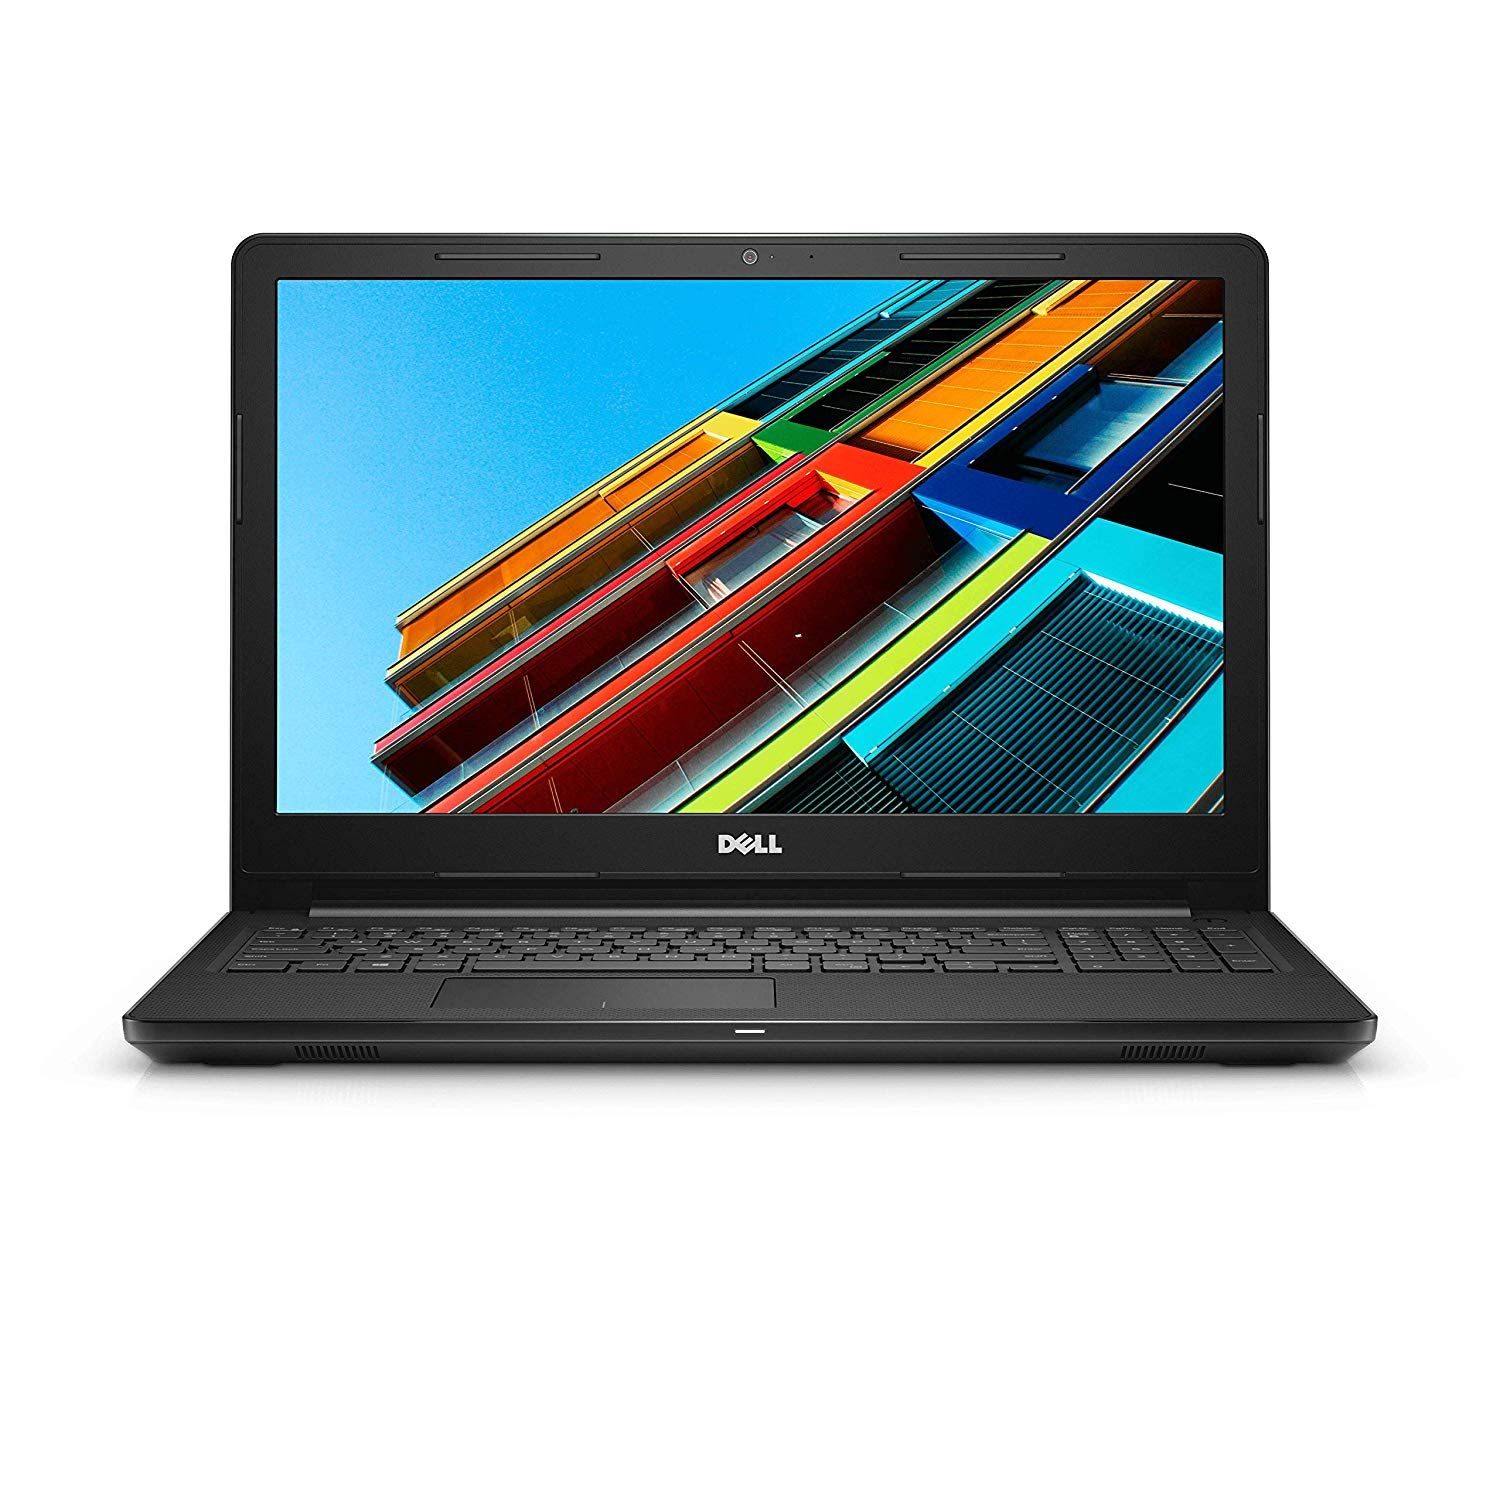 Dell Inspiron 3567 Intel Core i3 7th Gen 15.6-inch FHD Laptop